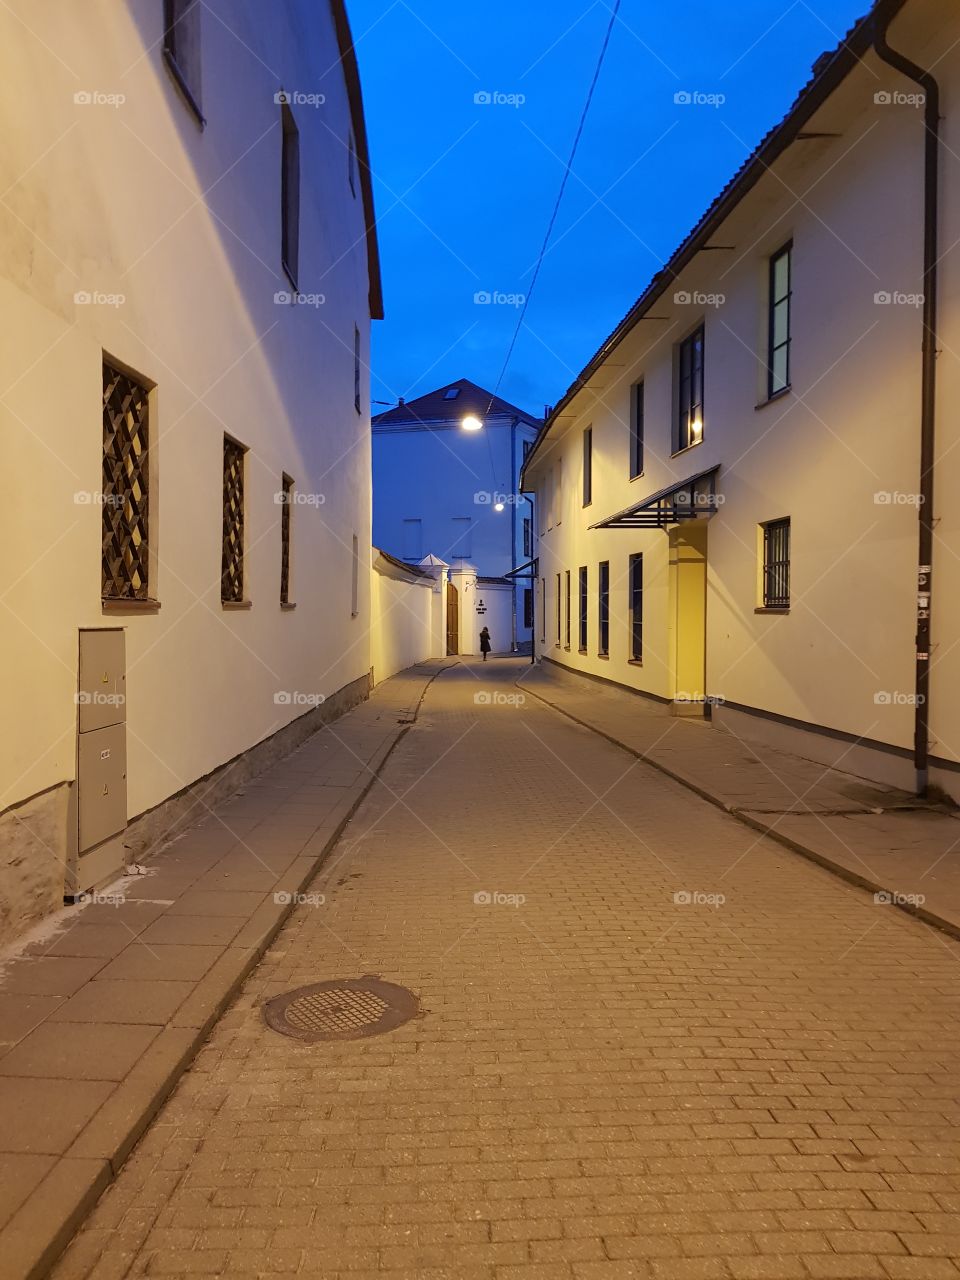 Beautiful old town in the dark.